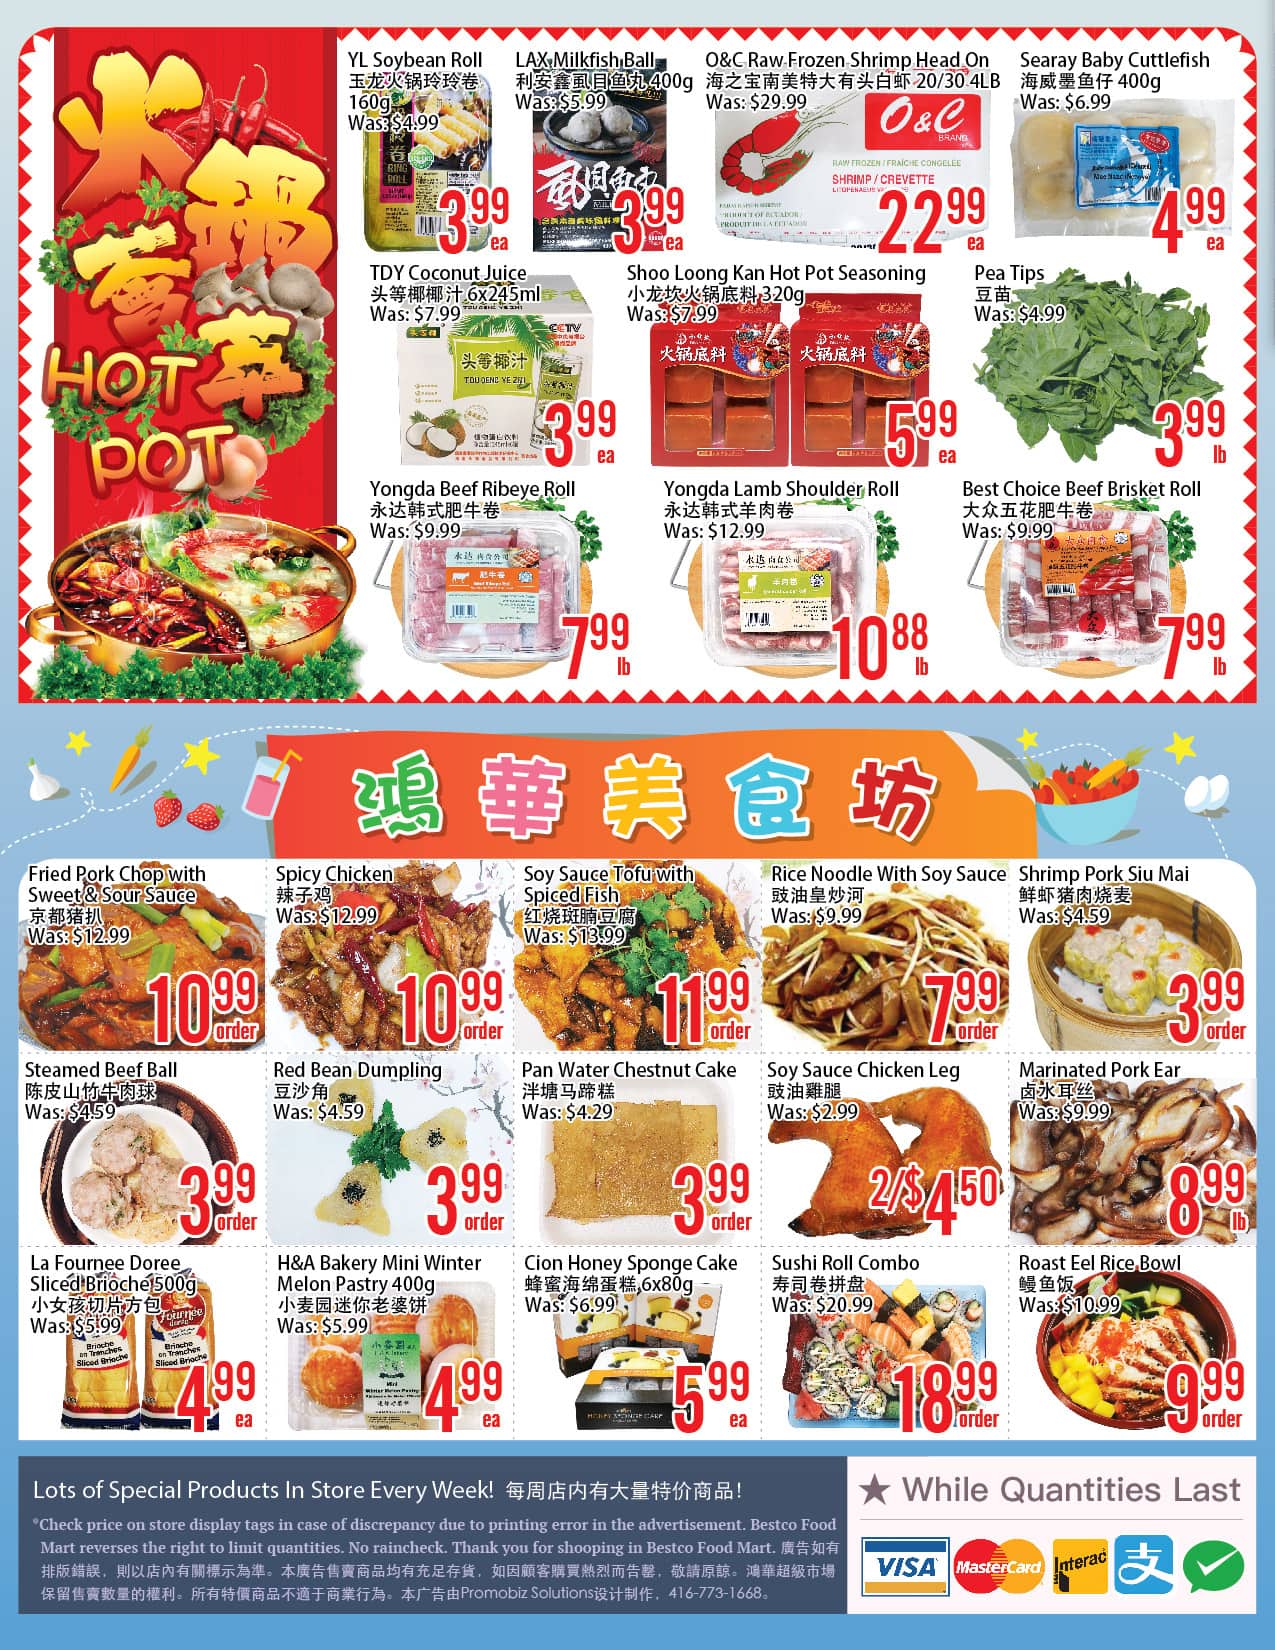 Bestco Food Mart - Scarborough - Weekly Flyer Specials - Page 3